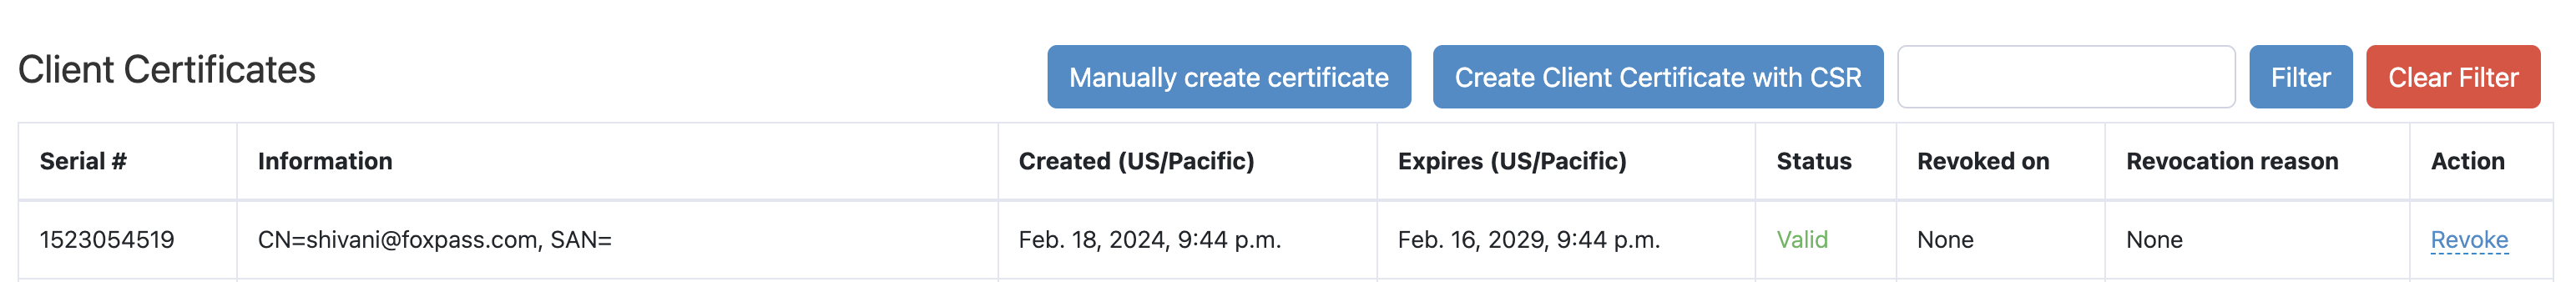 Client certificate

